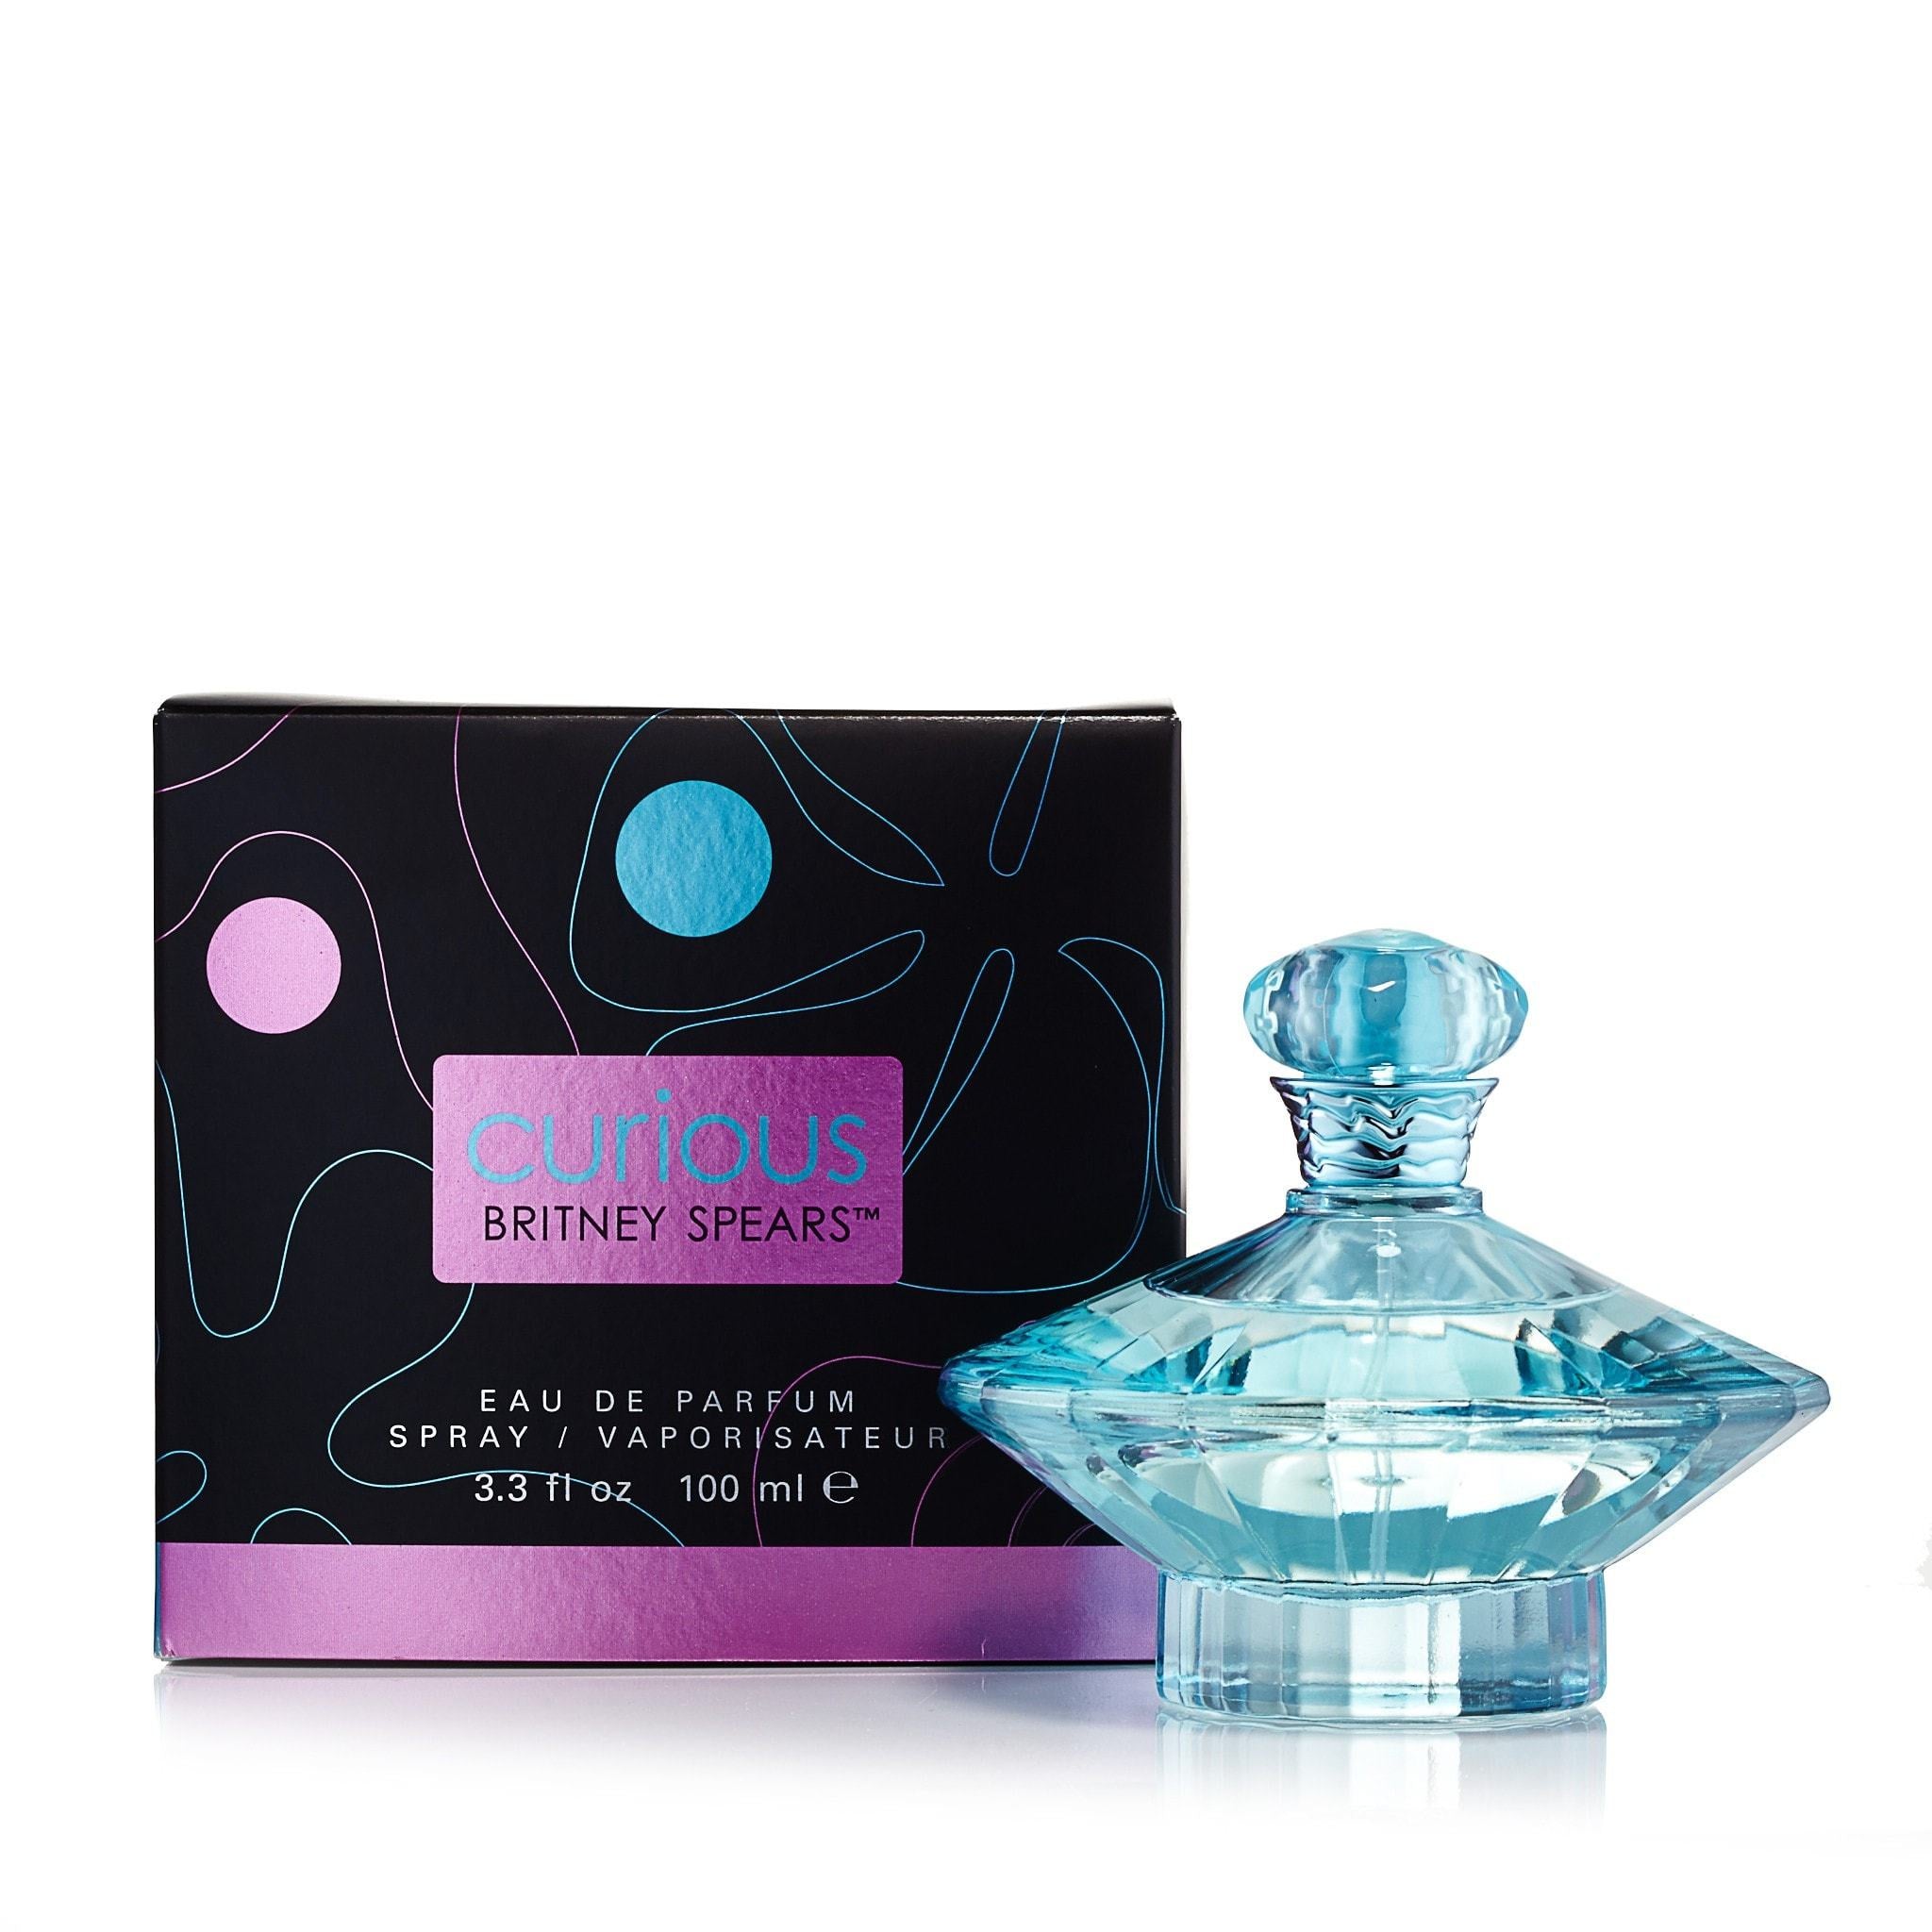  Britney Spears Women's Perfume, Curious, Eau De Parfum EDP  Spray, 3.3 Fl Oz : Britney Spears Perfume : Beauty & Personal Care